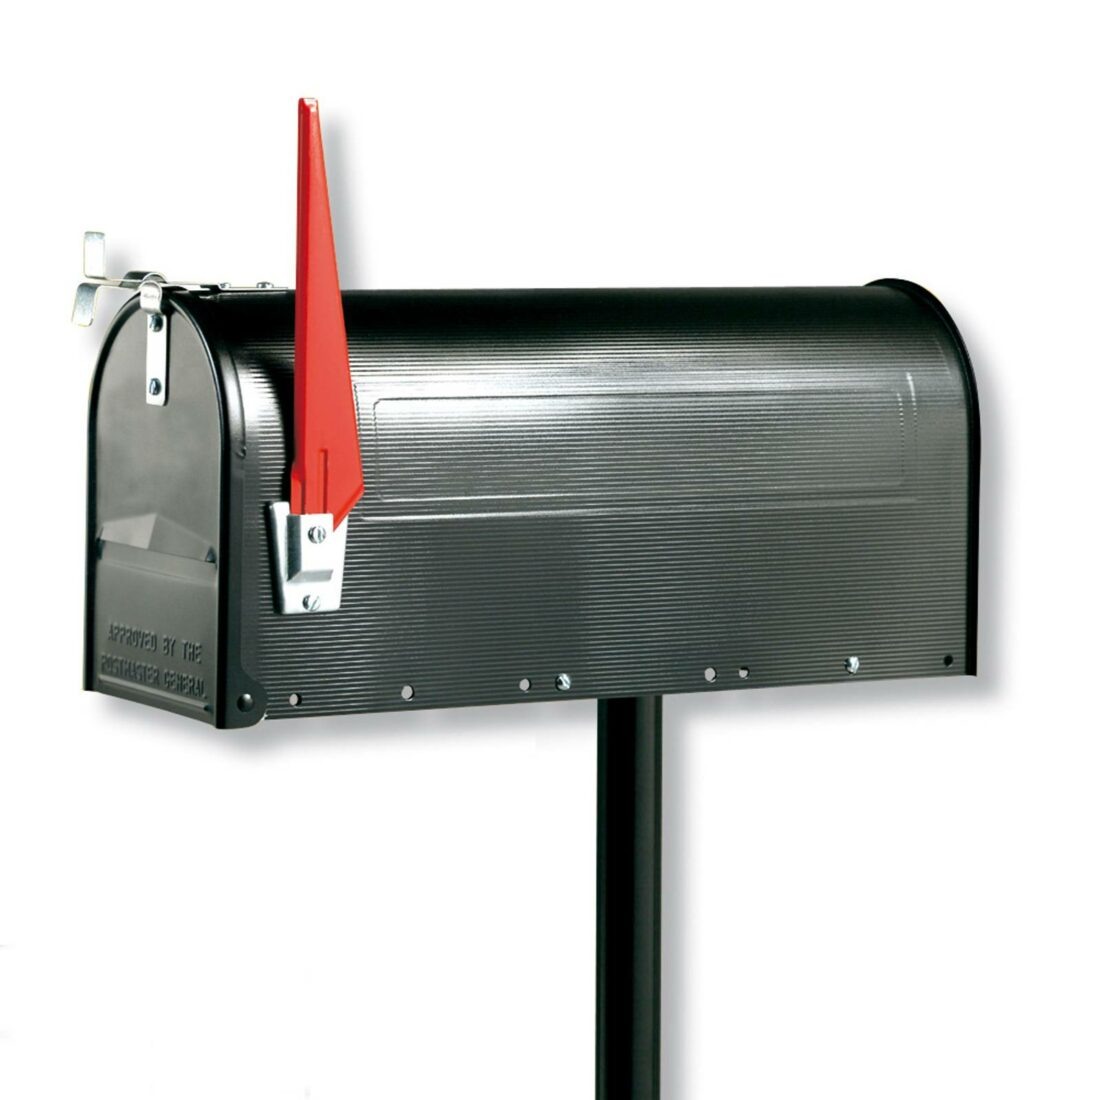 Burgwächter U.S. Mailbox s otočným praporkem